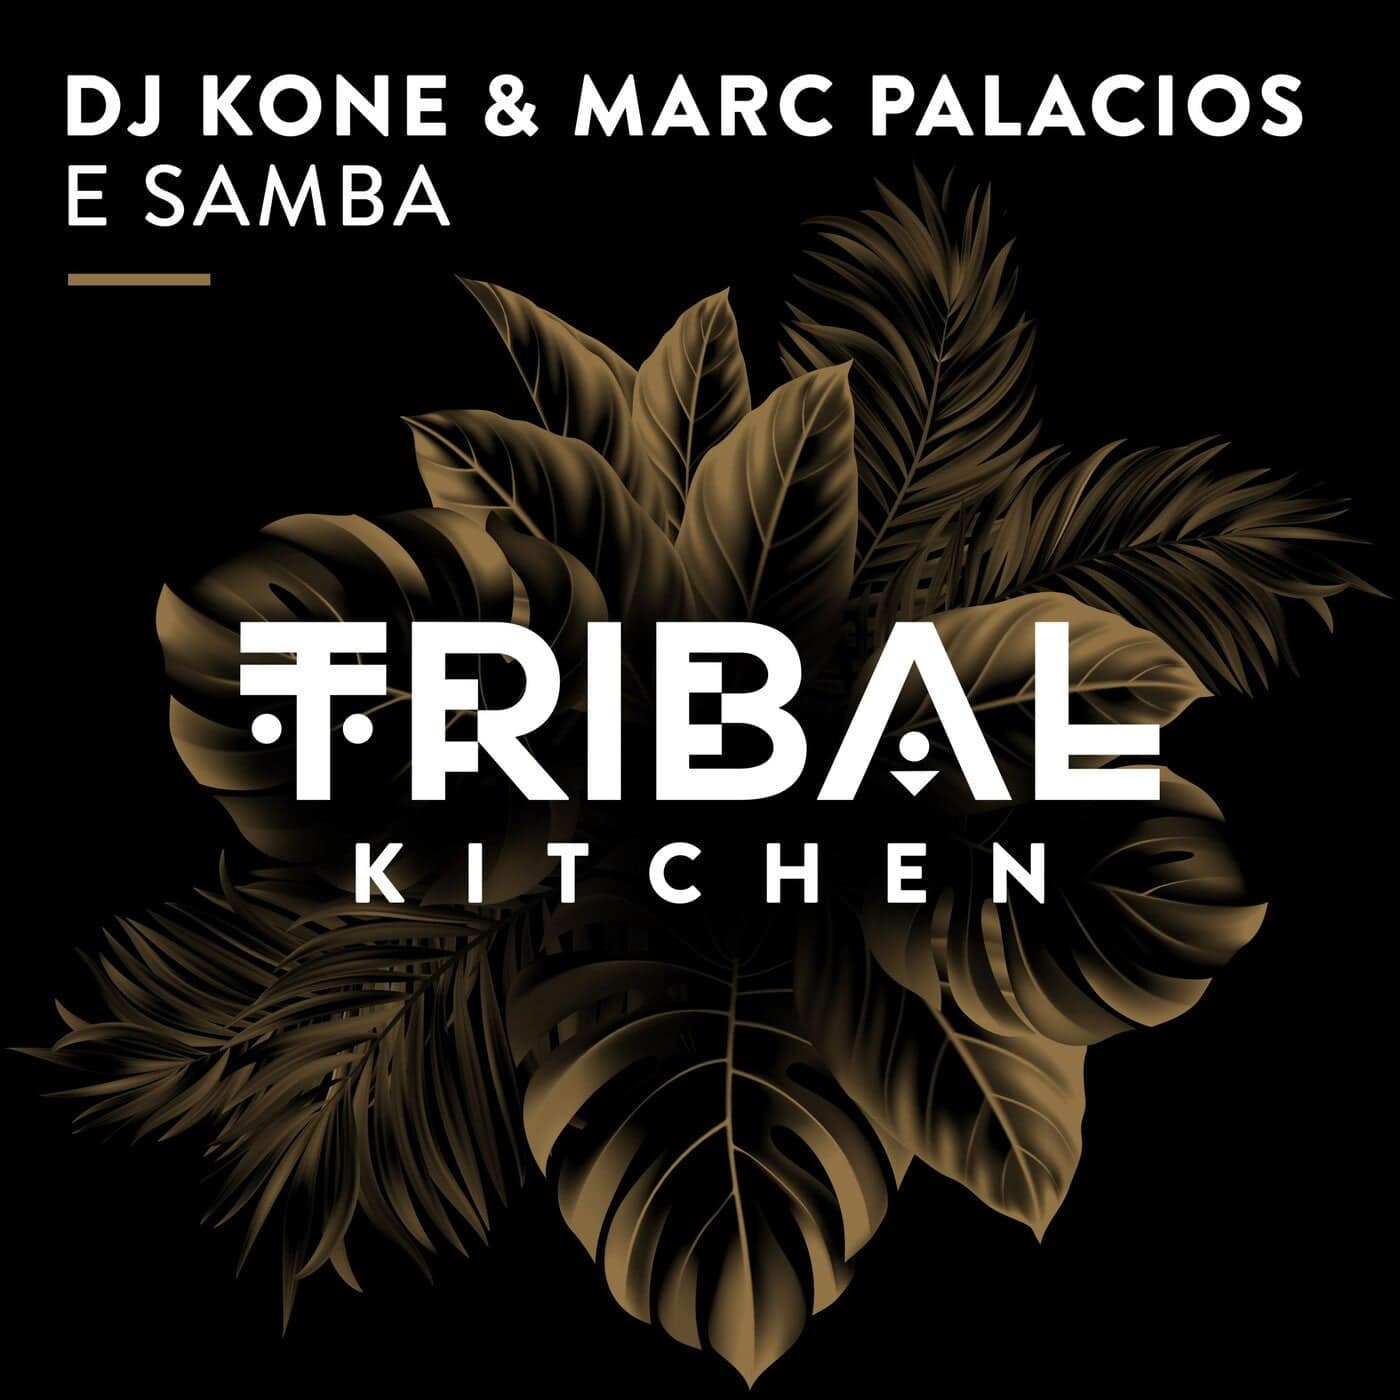 image cover: DJ Kone & Marc Palacios - E Samba on Tribal Kitchen